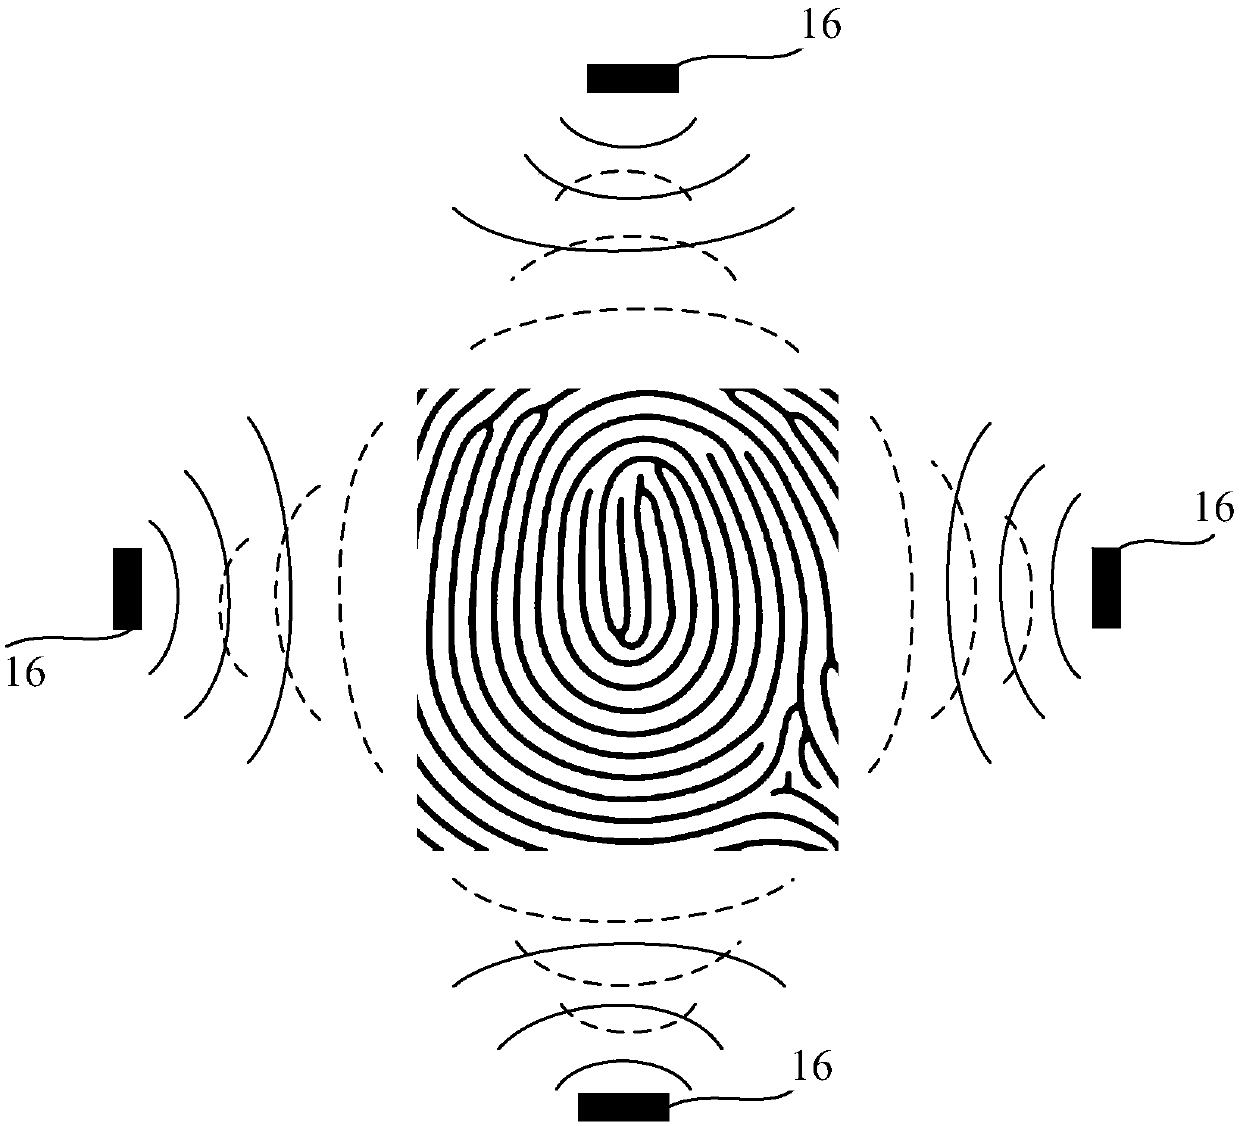 Terminal and fingerprint unlocking method